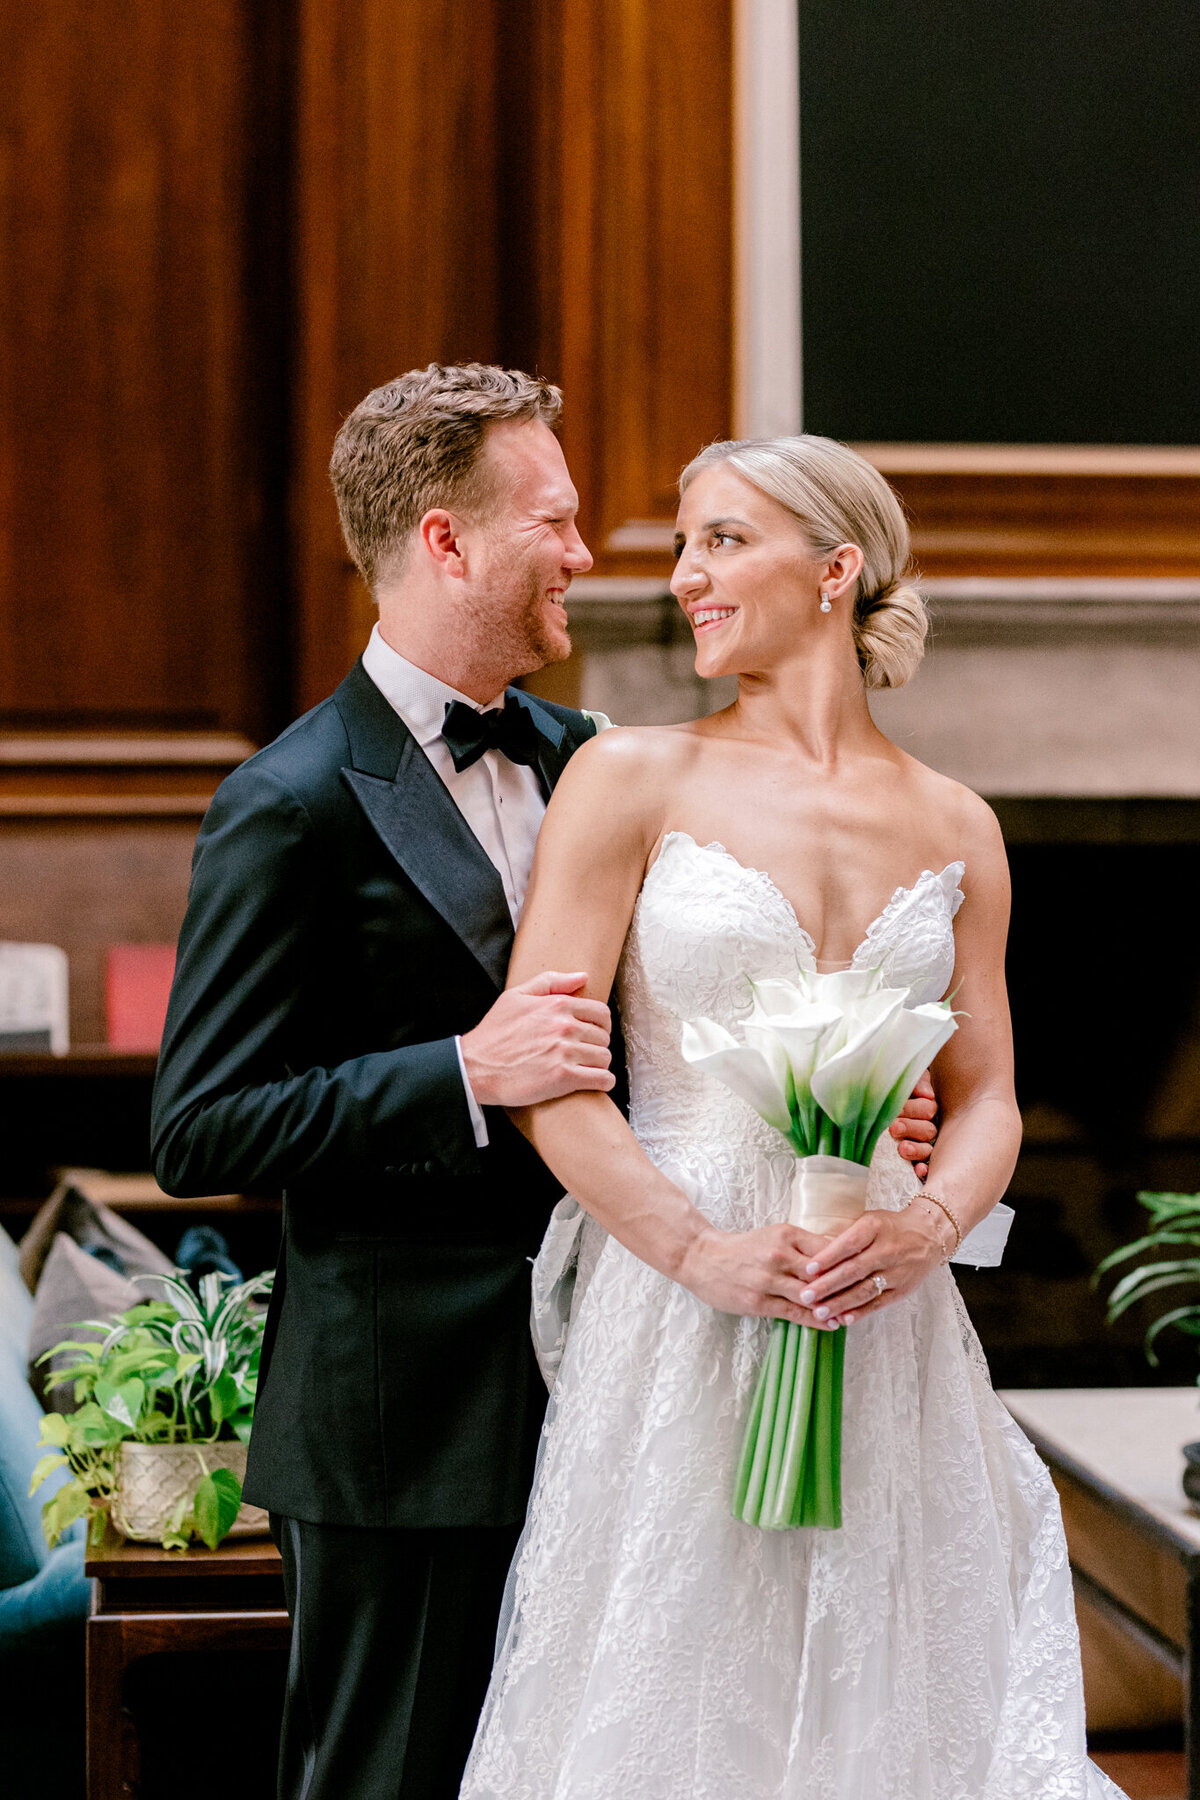 Katelyn & Kyle's Wedding at the Adolphus Hotel | Dallas Wedding Photographer | Sami Kathryn Photography-253